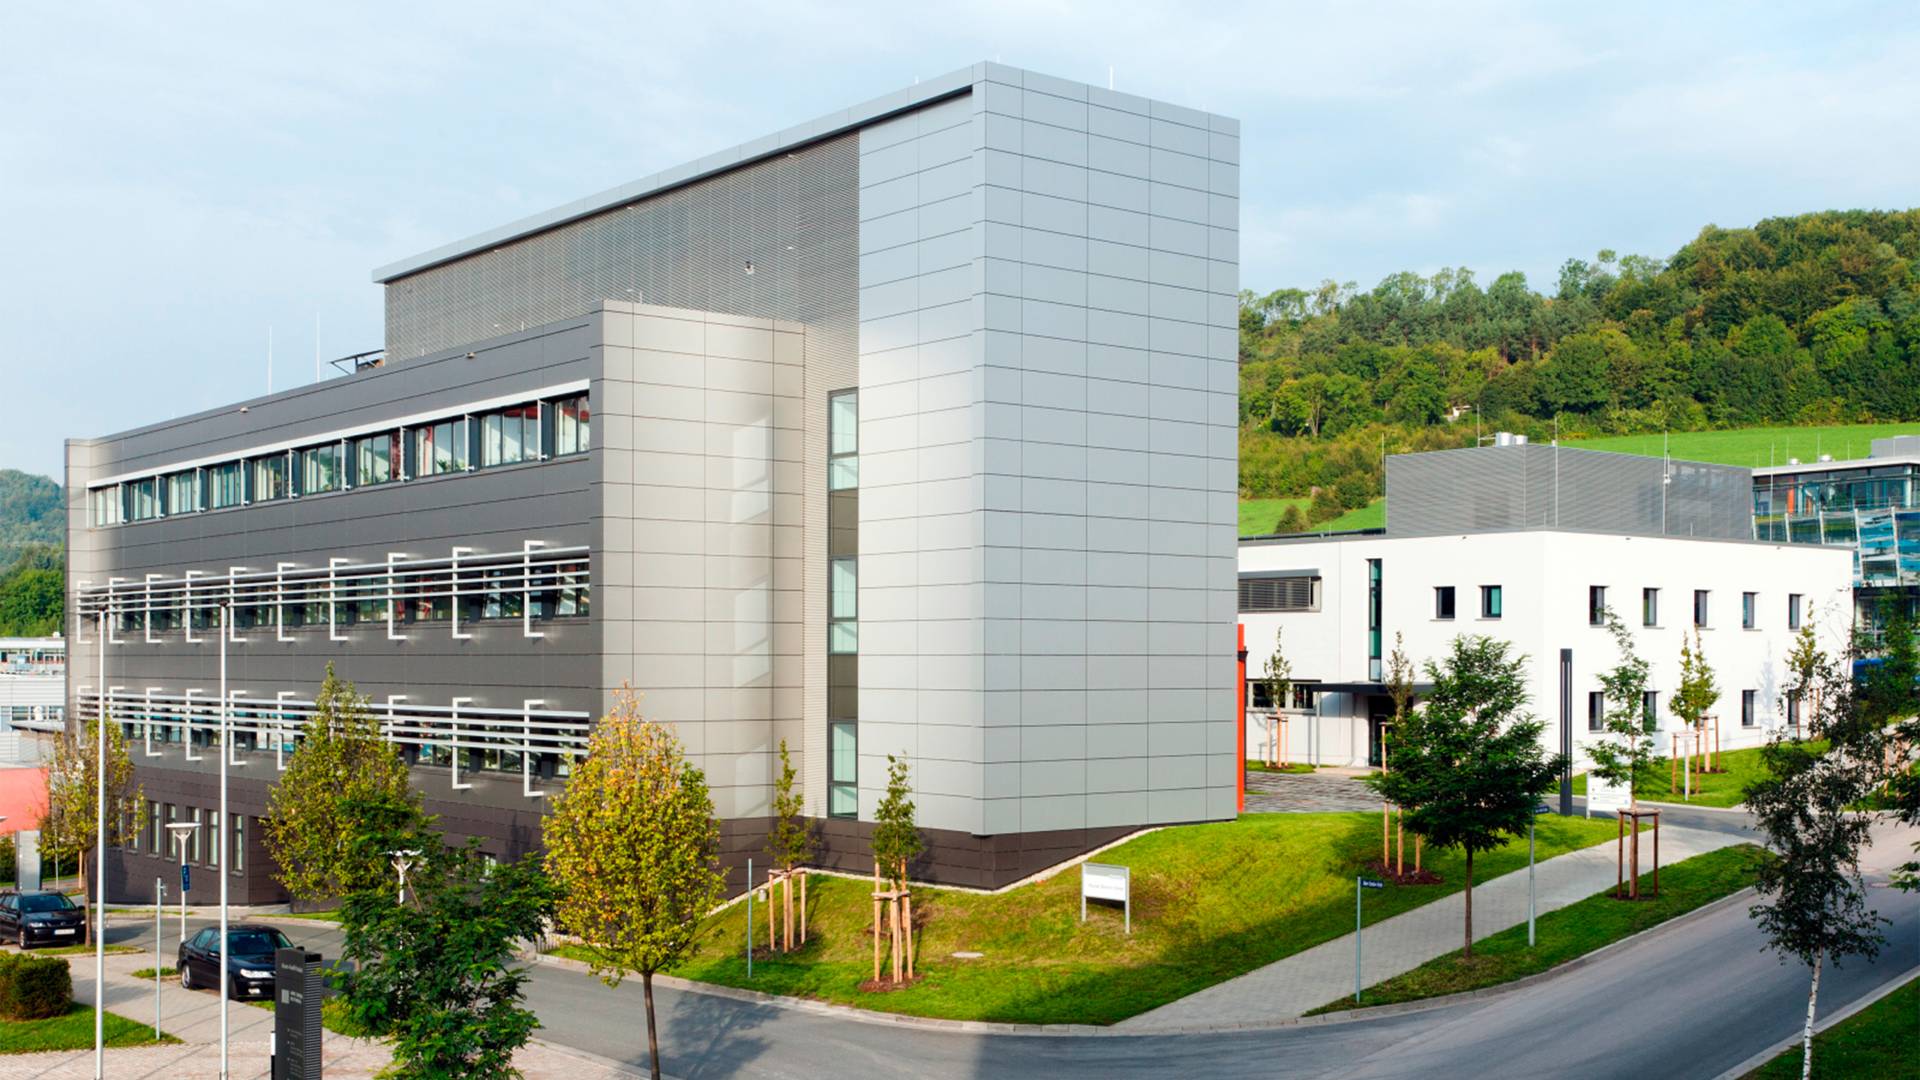 Wacker Biotech GmbH facilities in Jena from the outside